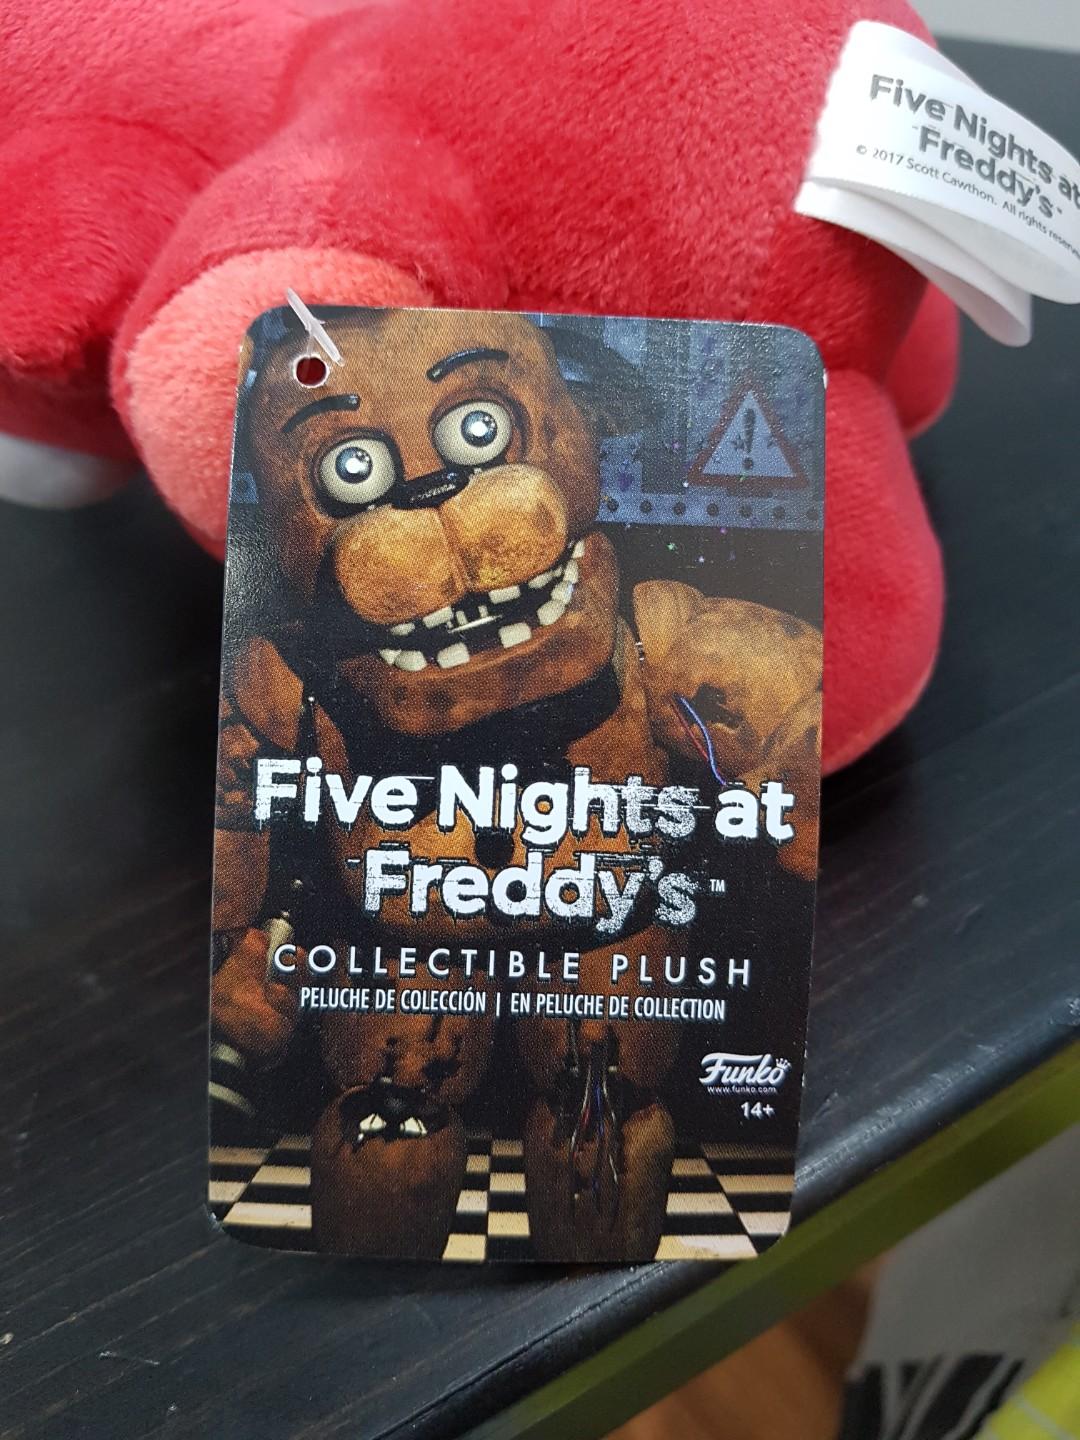  Funko Five Nights at Freddy's Foxy Plush, 6 : Toys